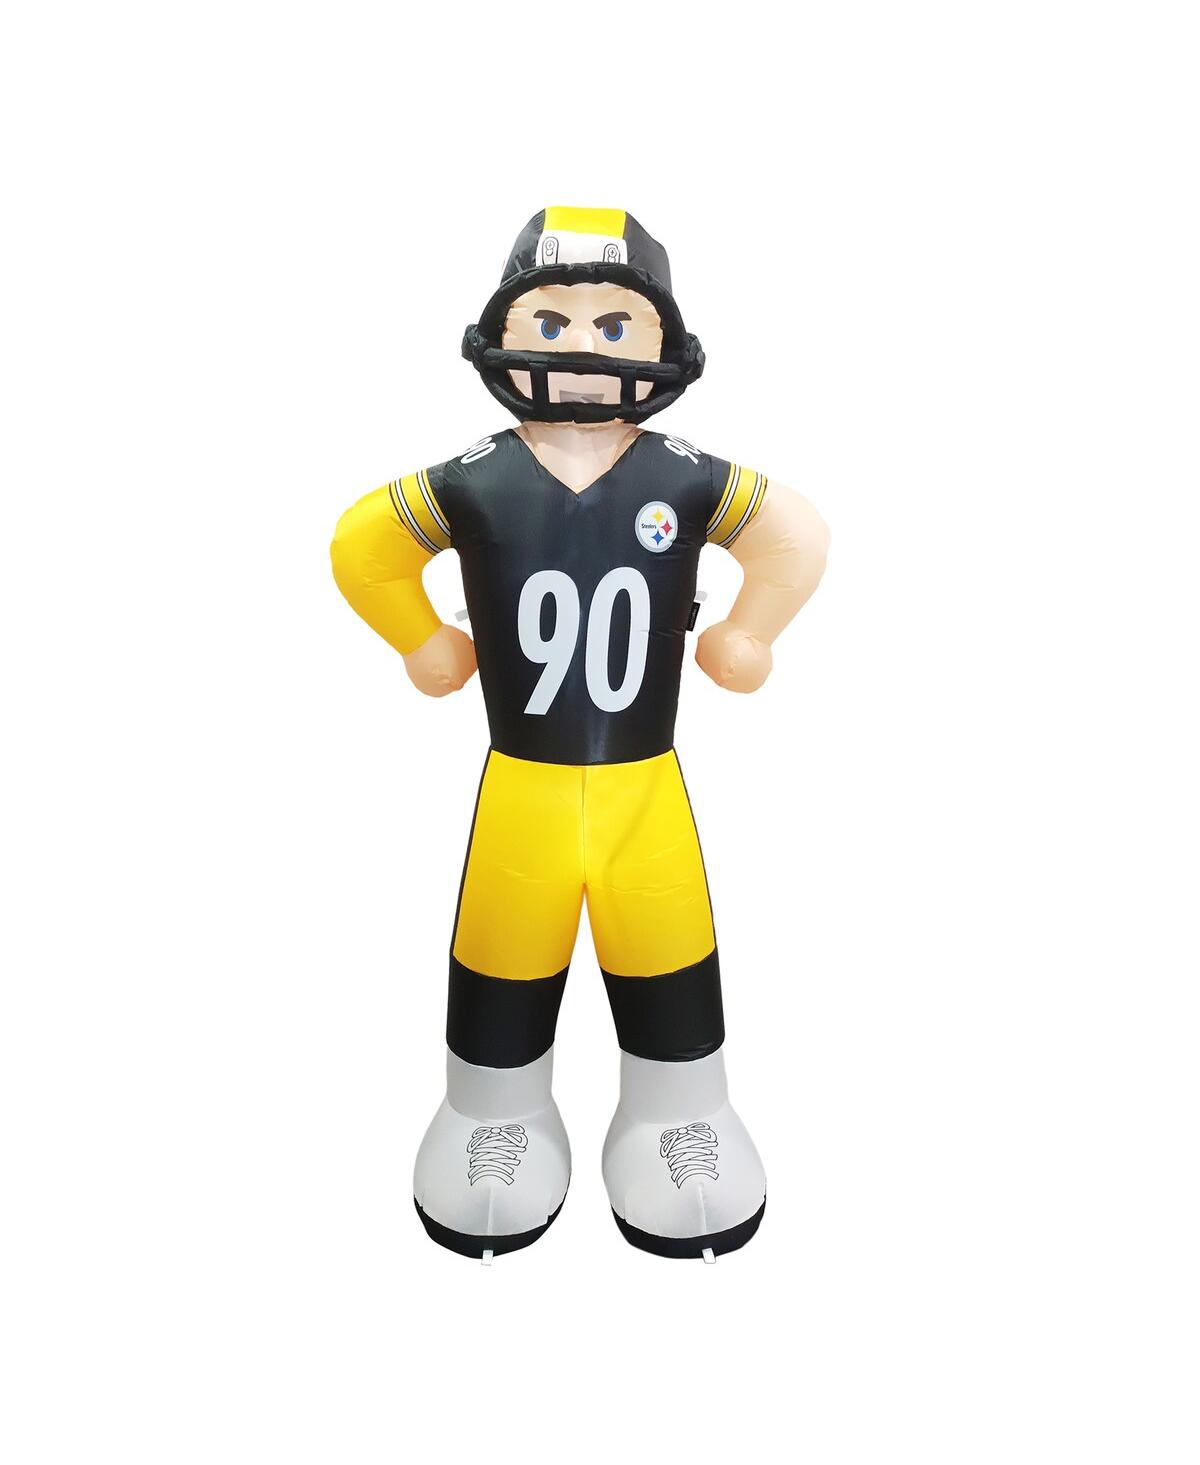 T.j. Watt Pittsburgh Steelers Player Lawn Inflatable - Black, Yellow